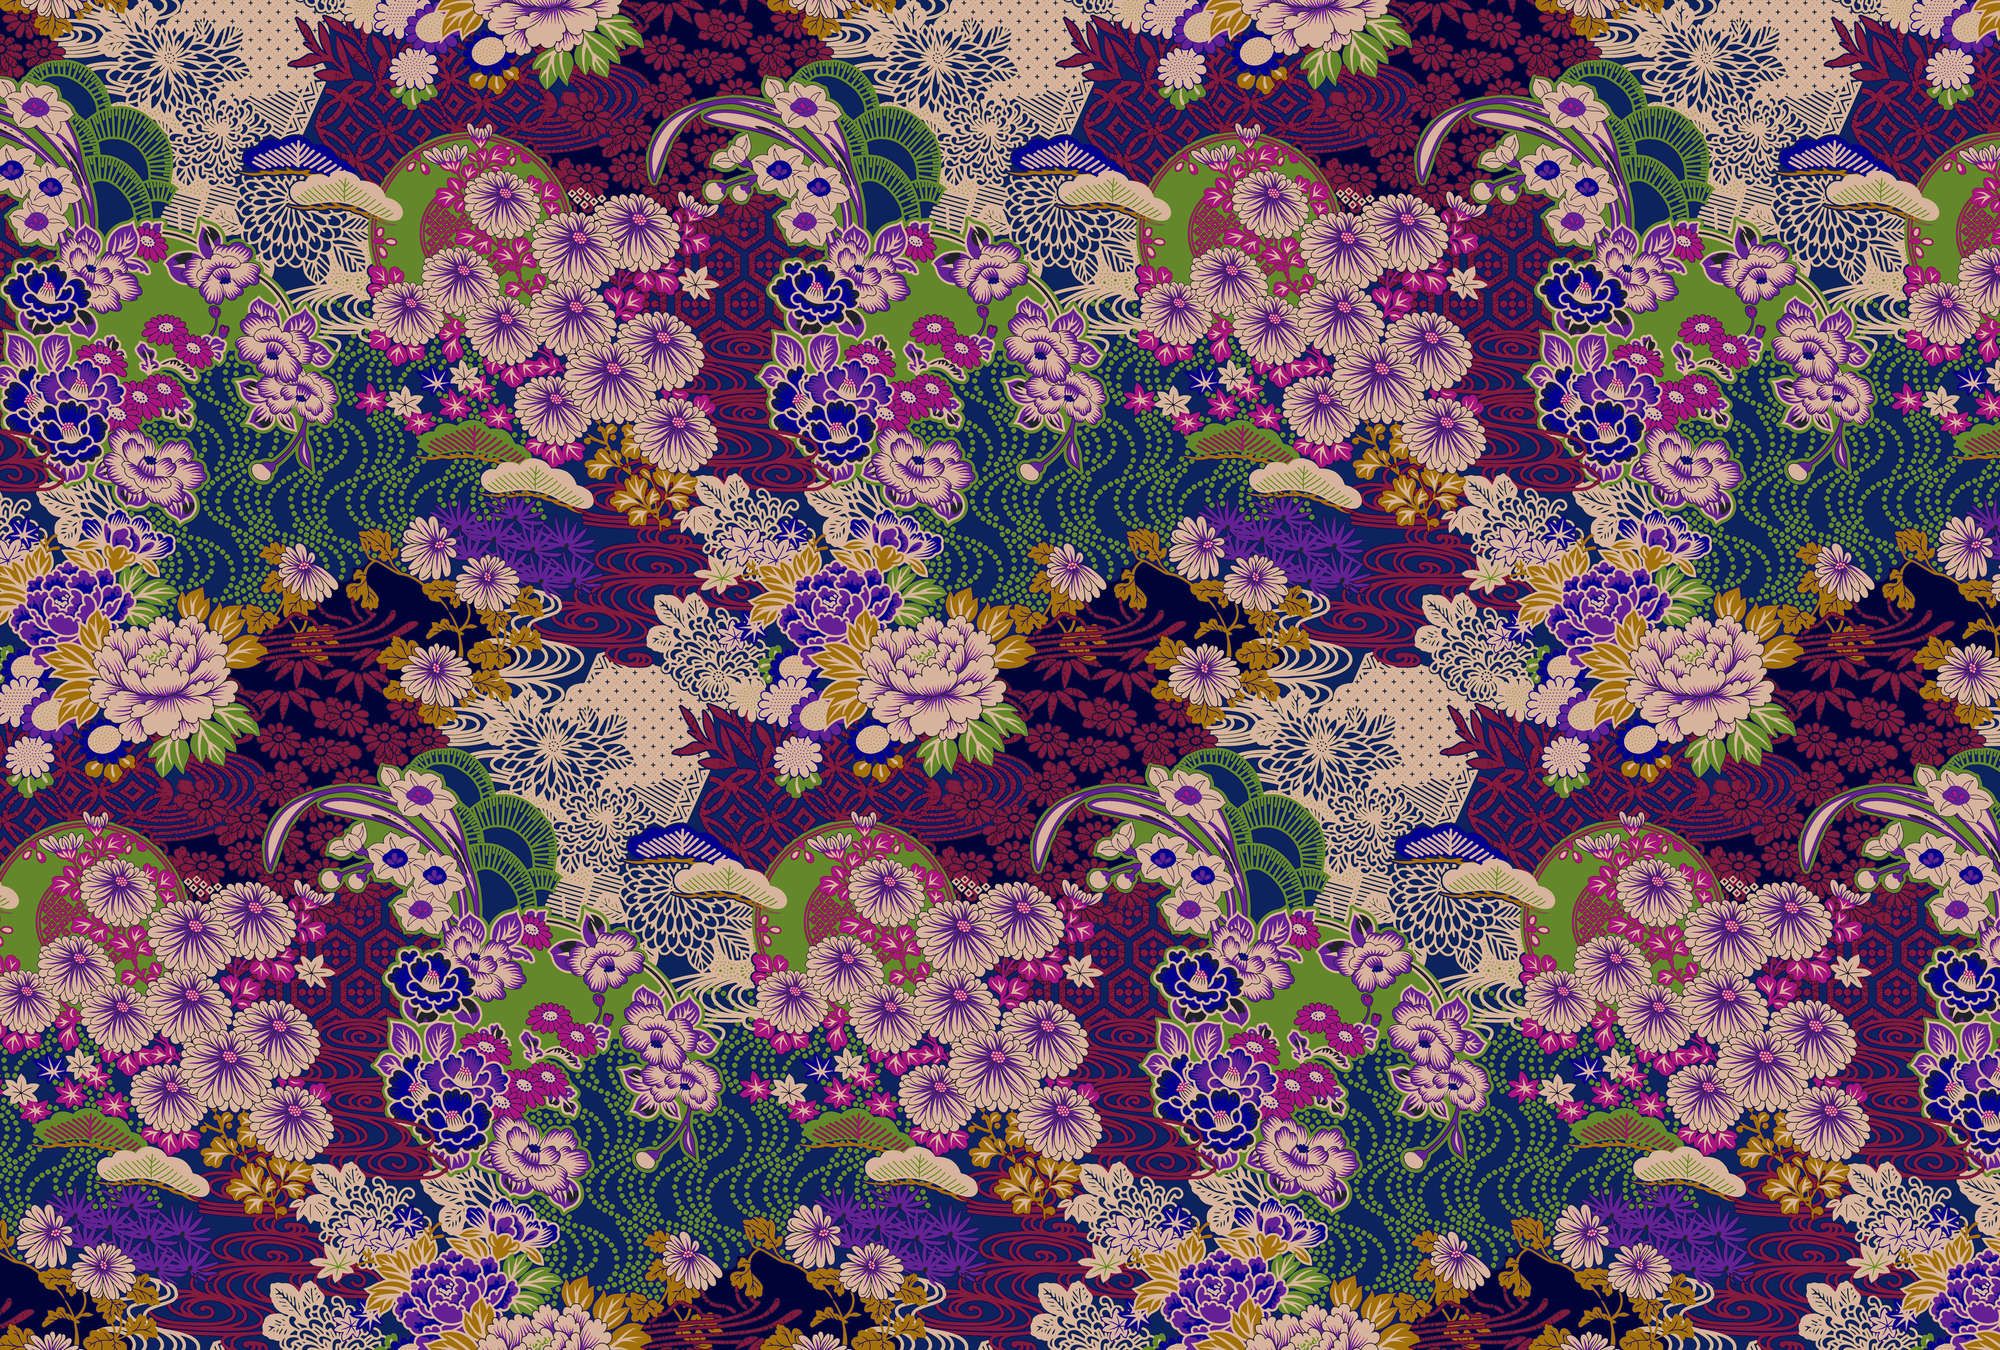             Fototapete »kimo 2« - Abstraktes Blüten-Artwork – Lila, Grün | Glattes, leicht glänzendes Premiumvlies
        